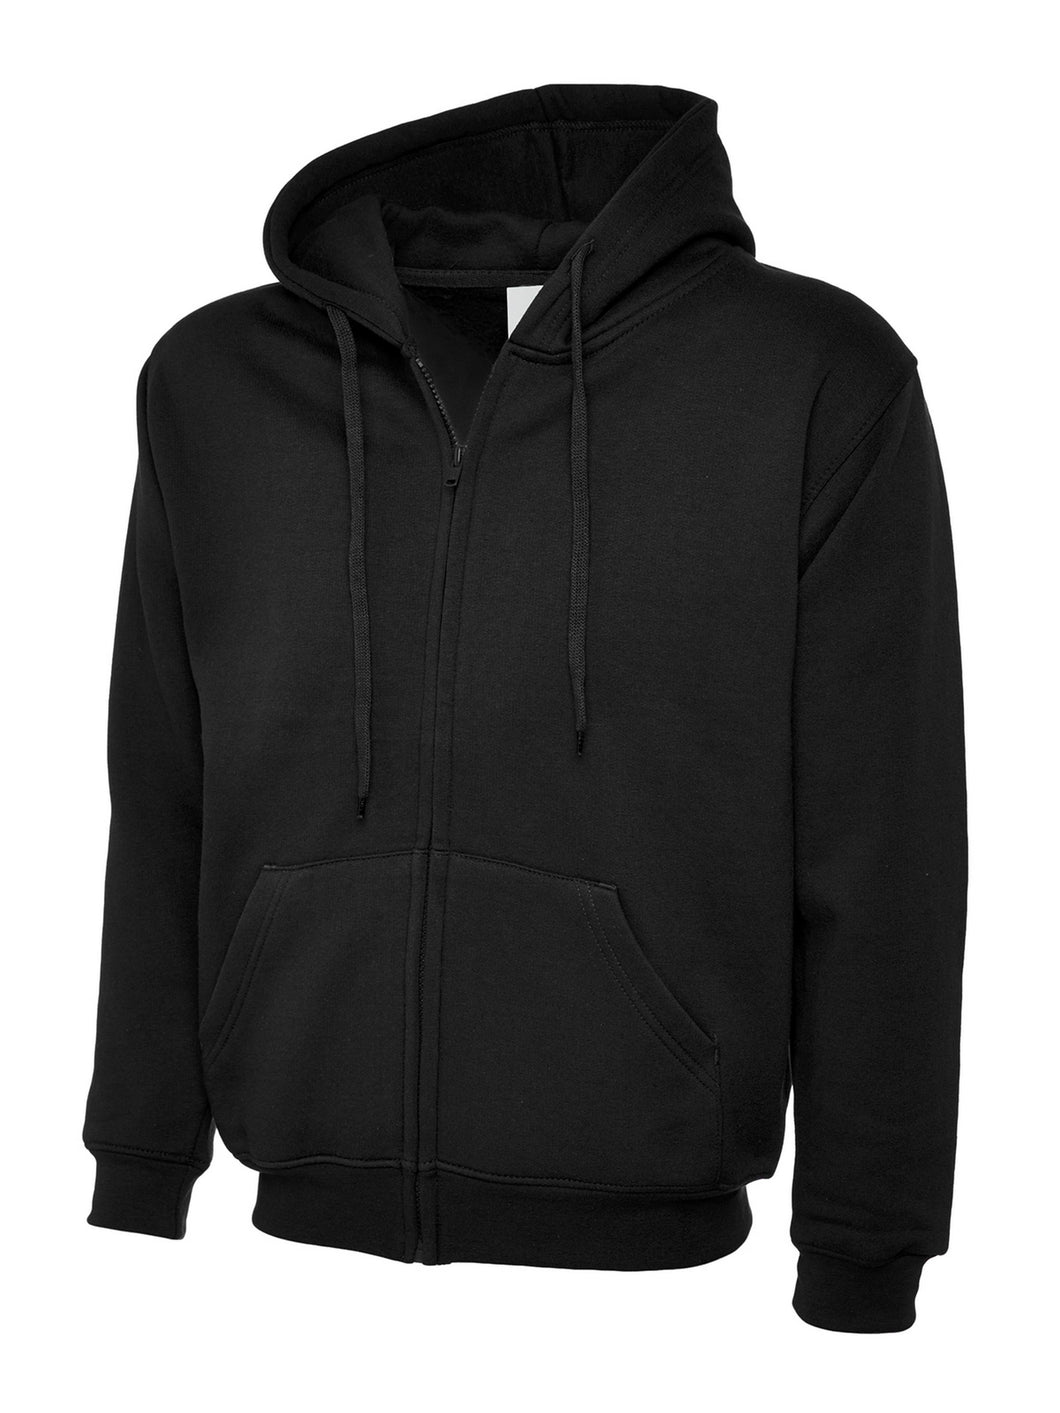 Uneek Classic Zip hoodie Gazelle Sports UK XS Black 